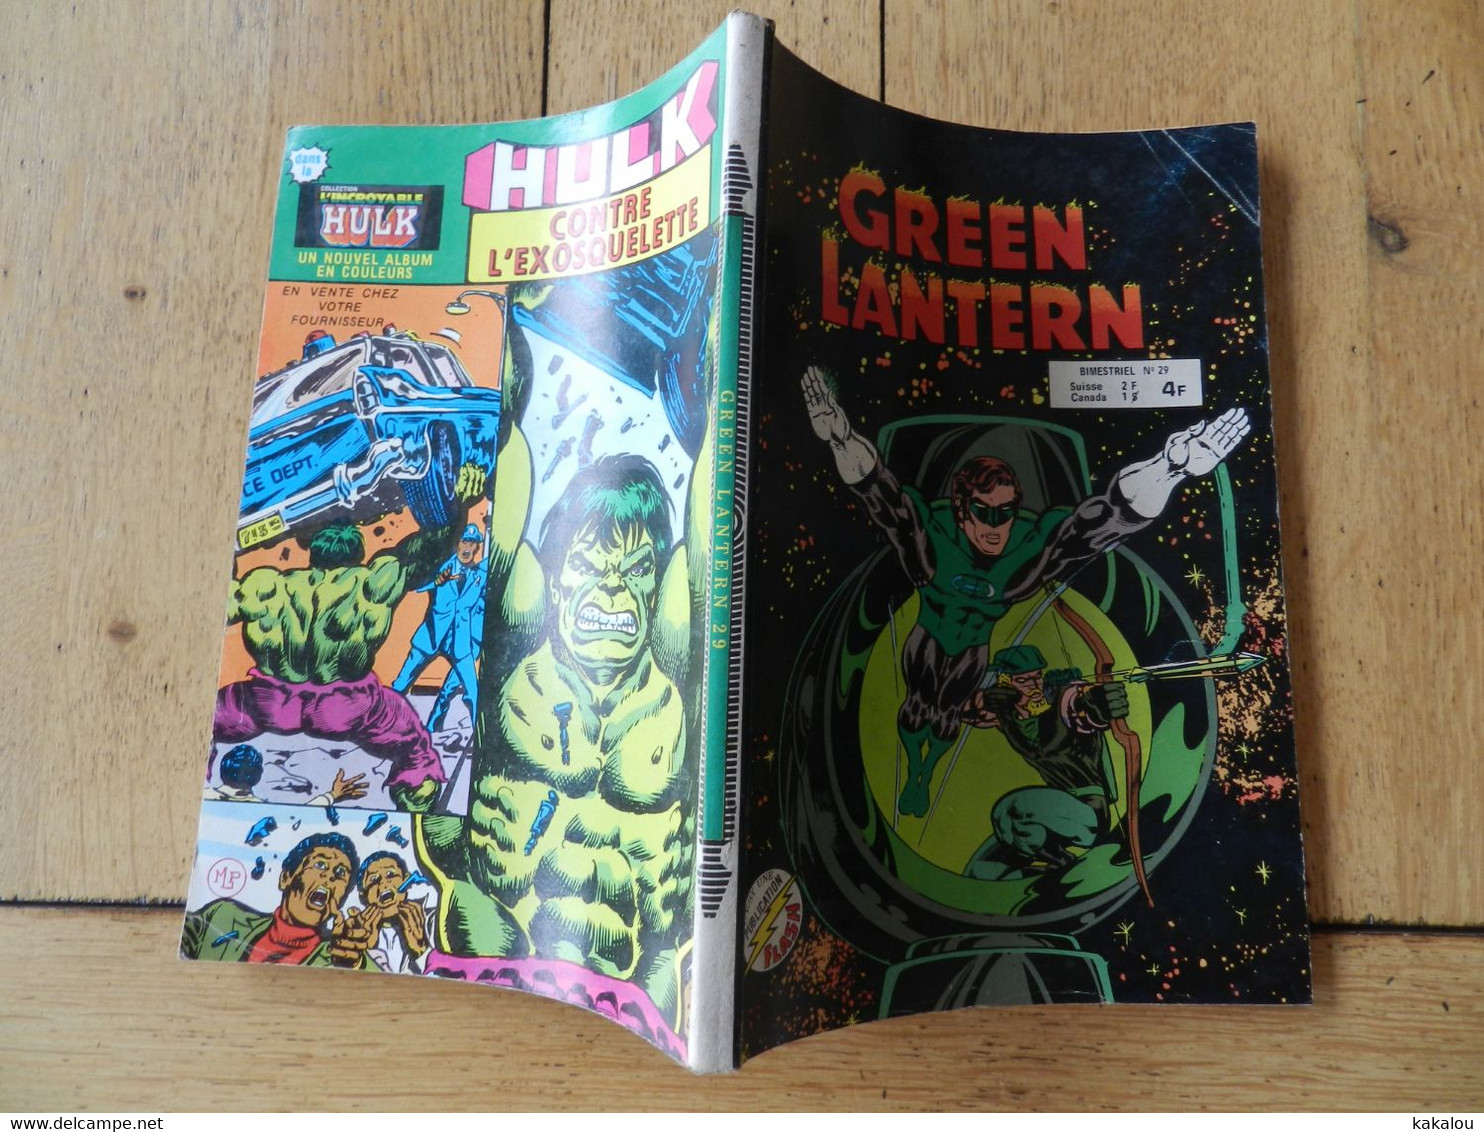 COMICS POCKET / GREEN LANTERN / N° 29 / 1979 - Green Lantern